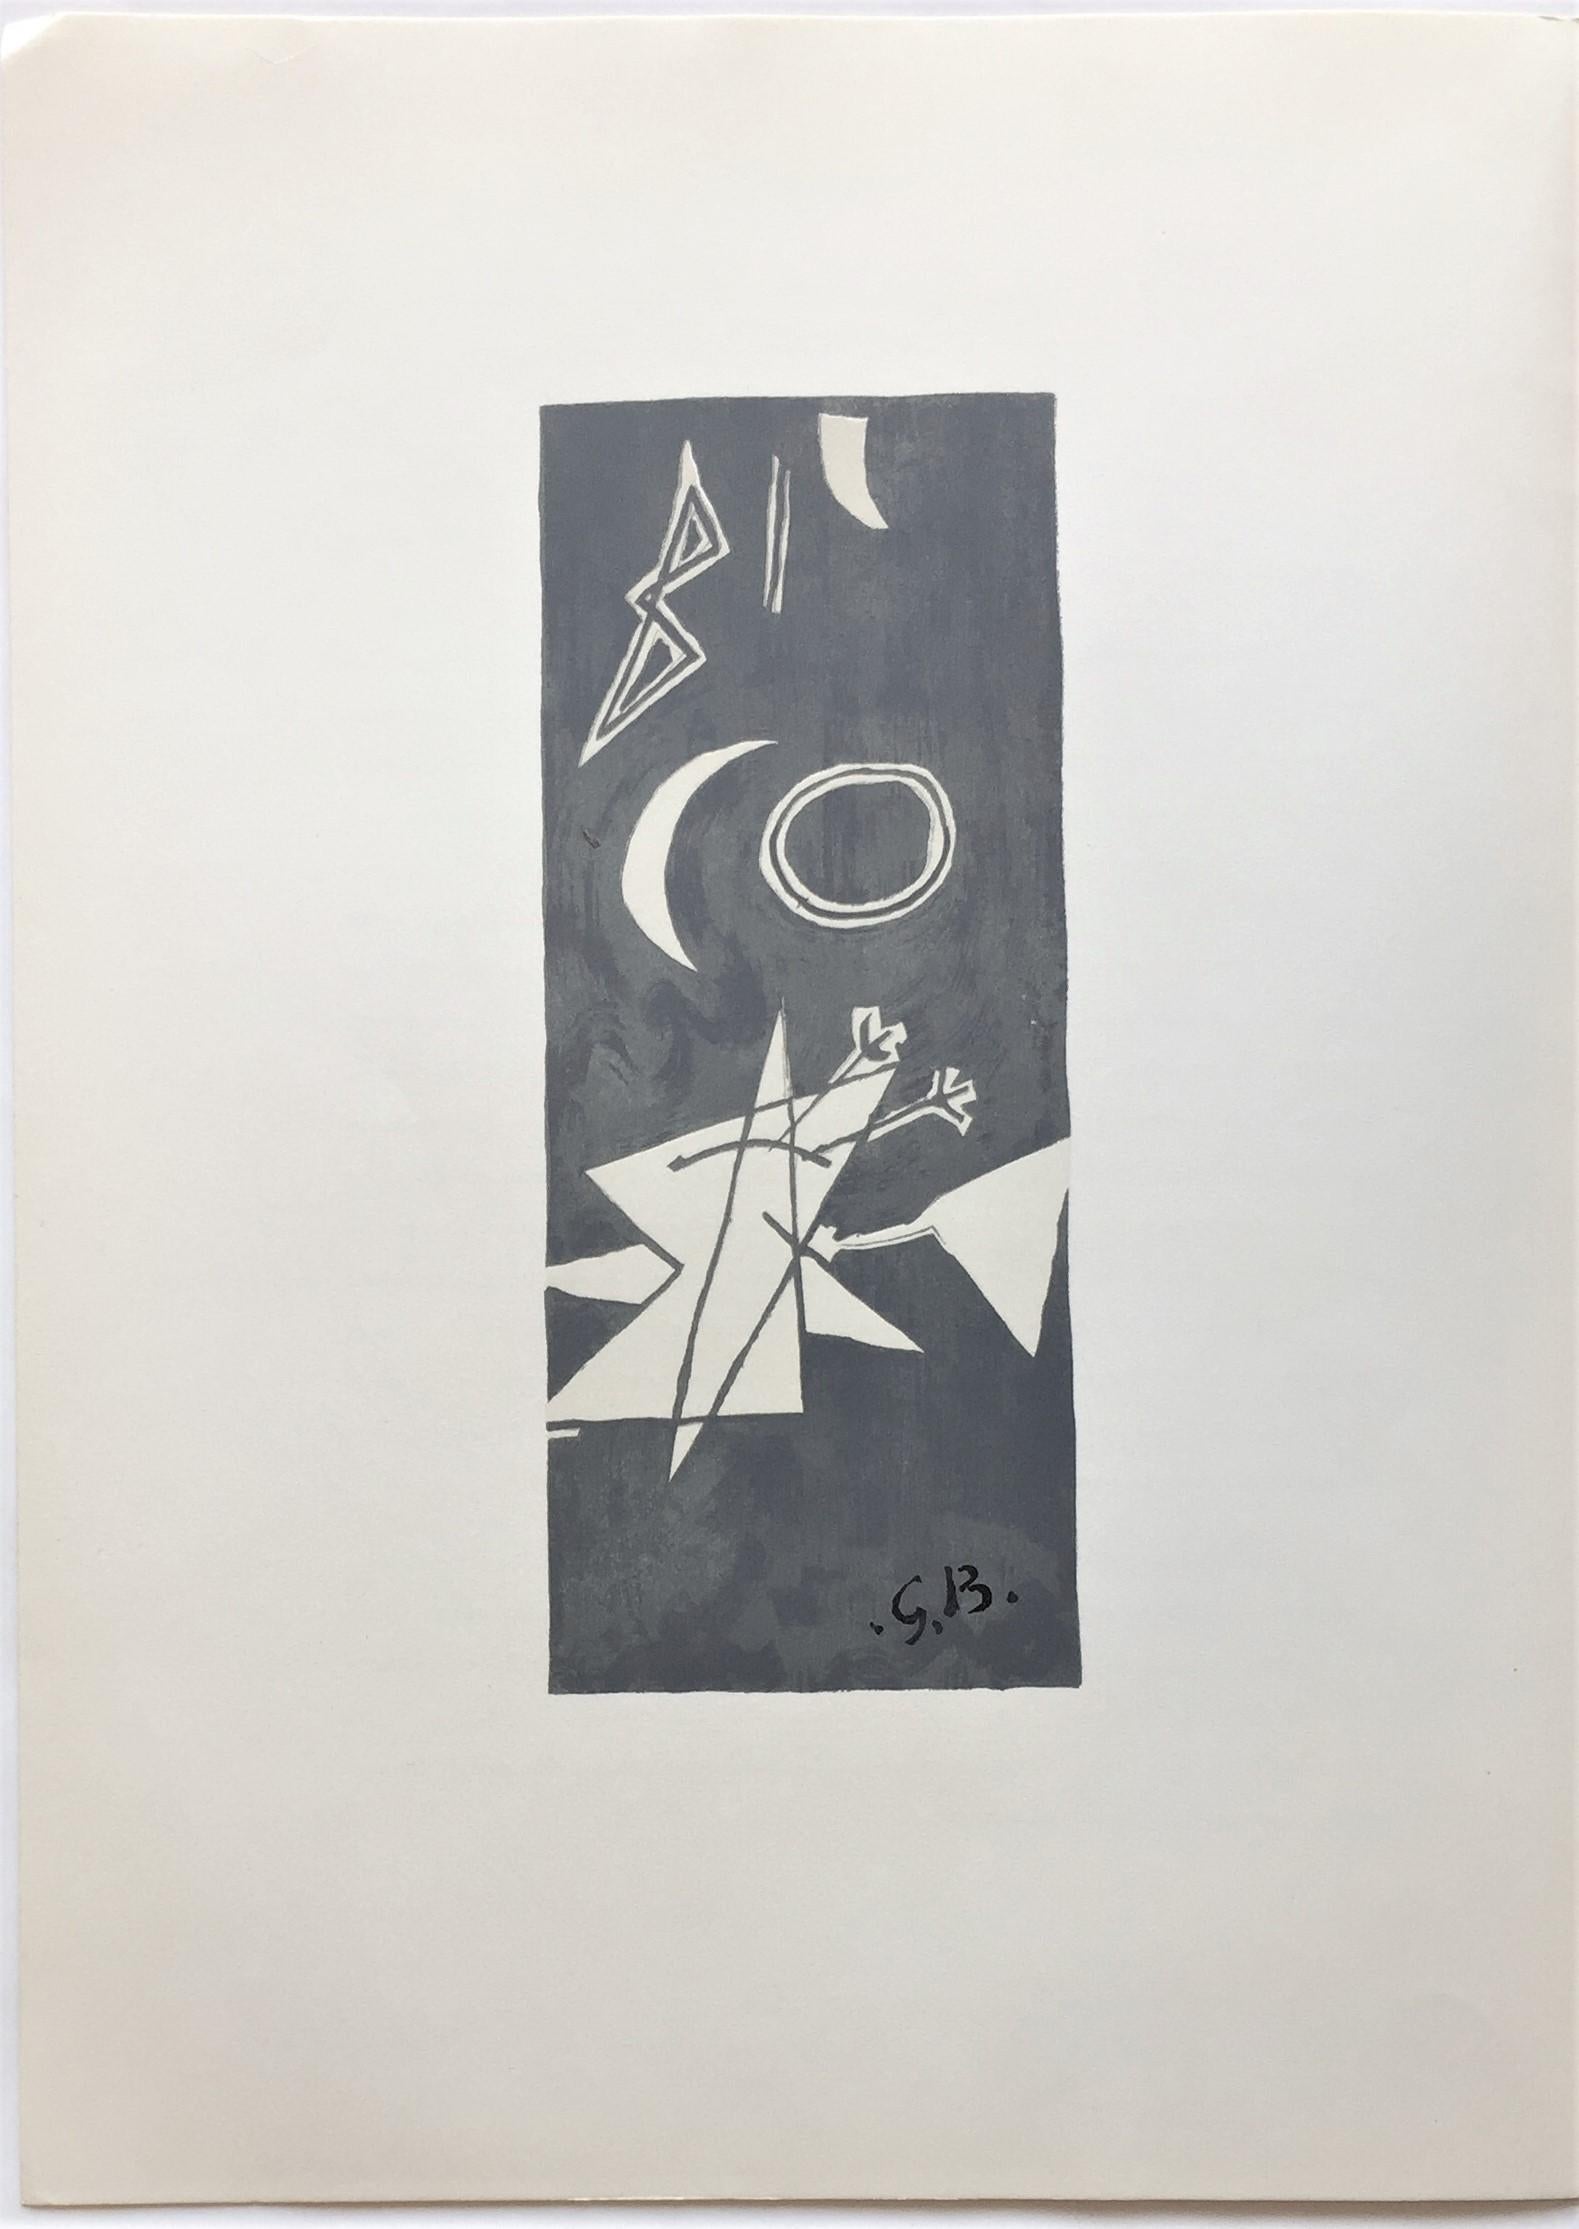 Ciel Gris II (Grey Sky II) - Print by (after) Georges Braque